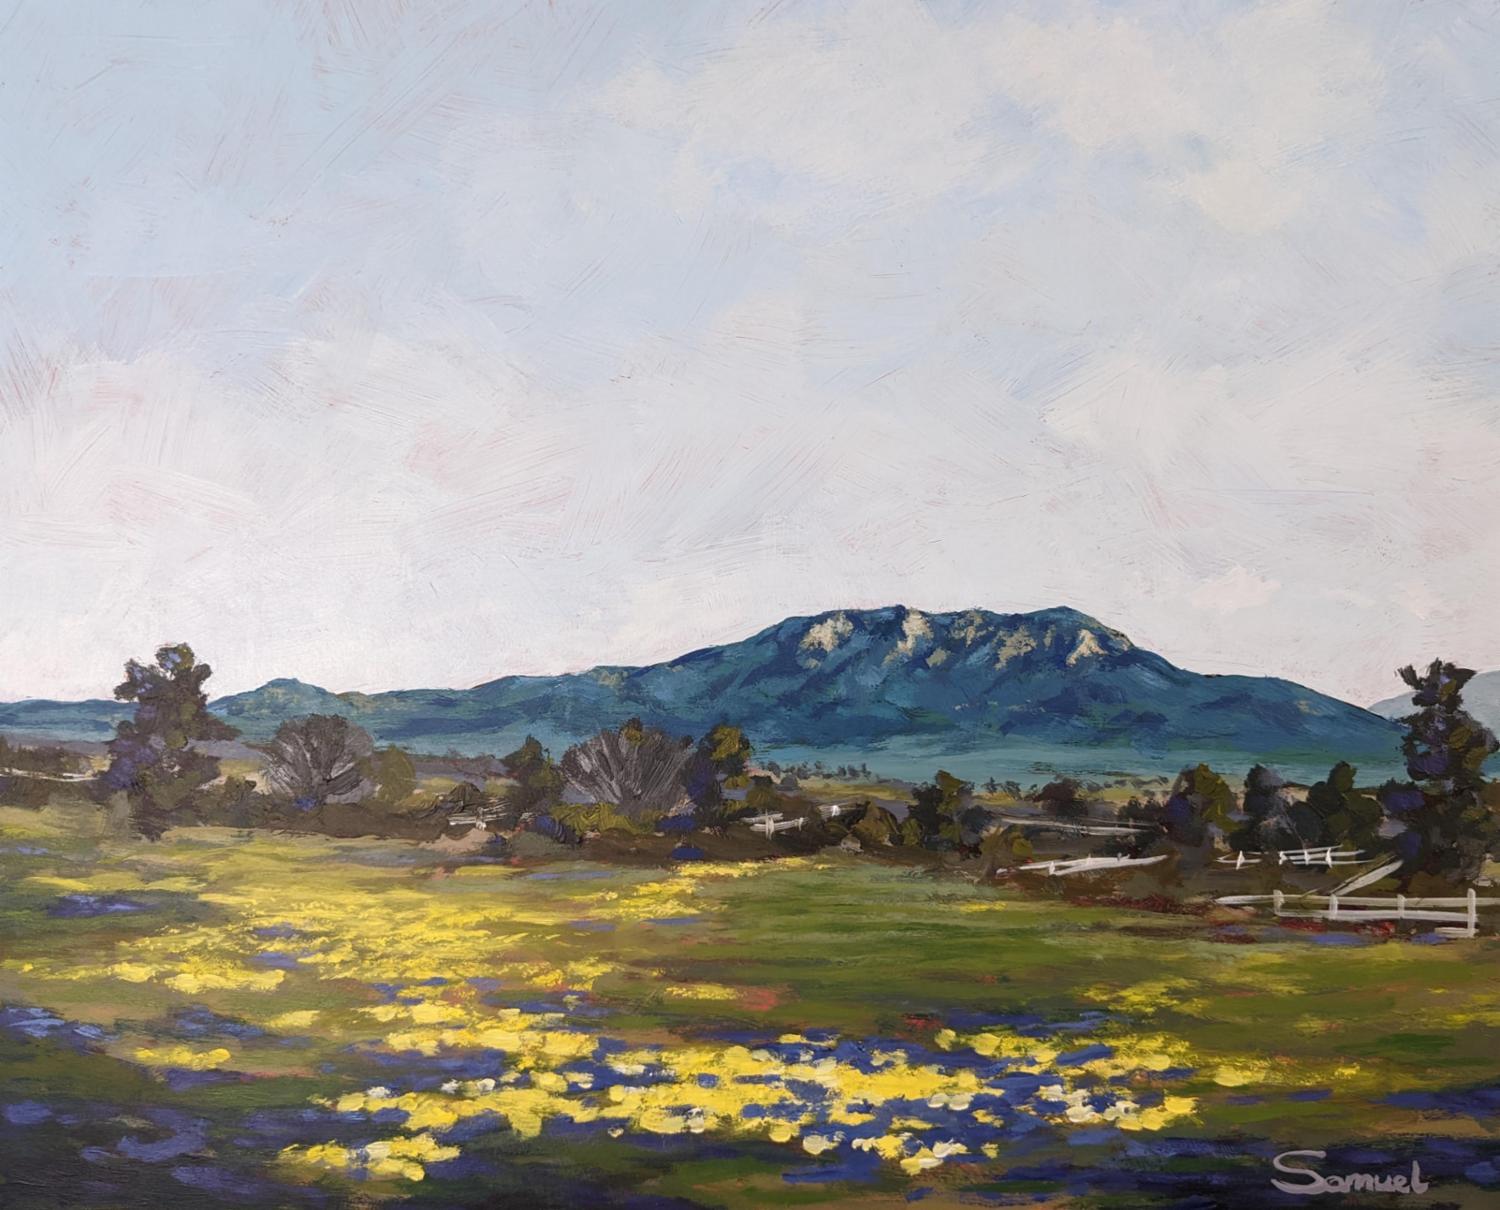 Majestic Cahuilla  Mountain and Spring Blossoms, Original Painting - Art by Samuel Pretorius